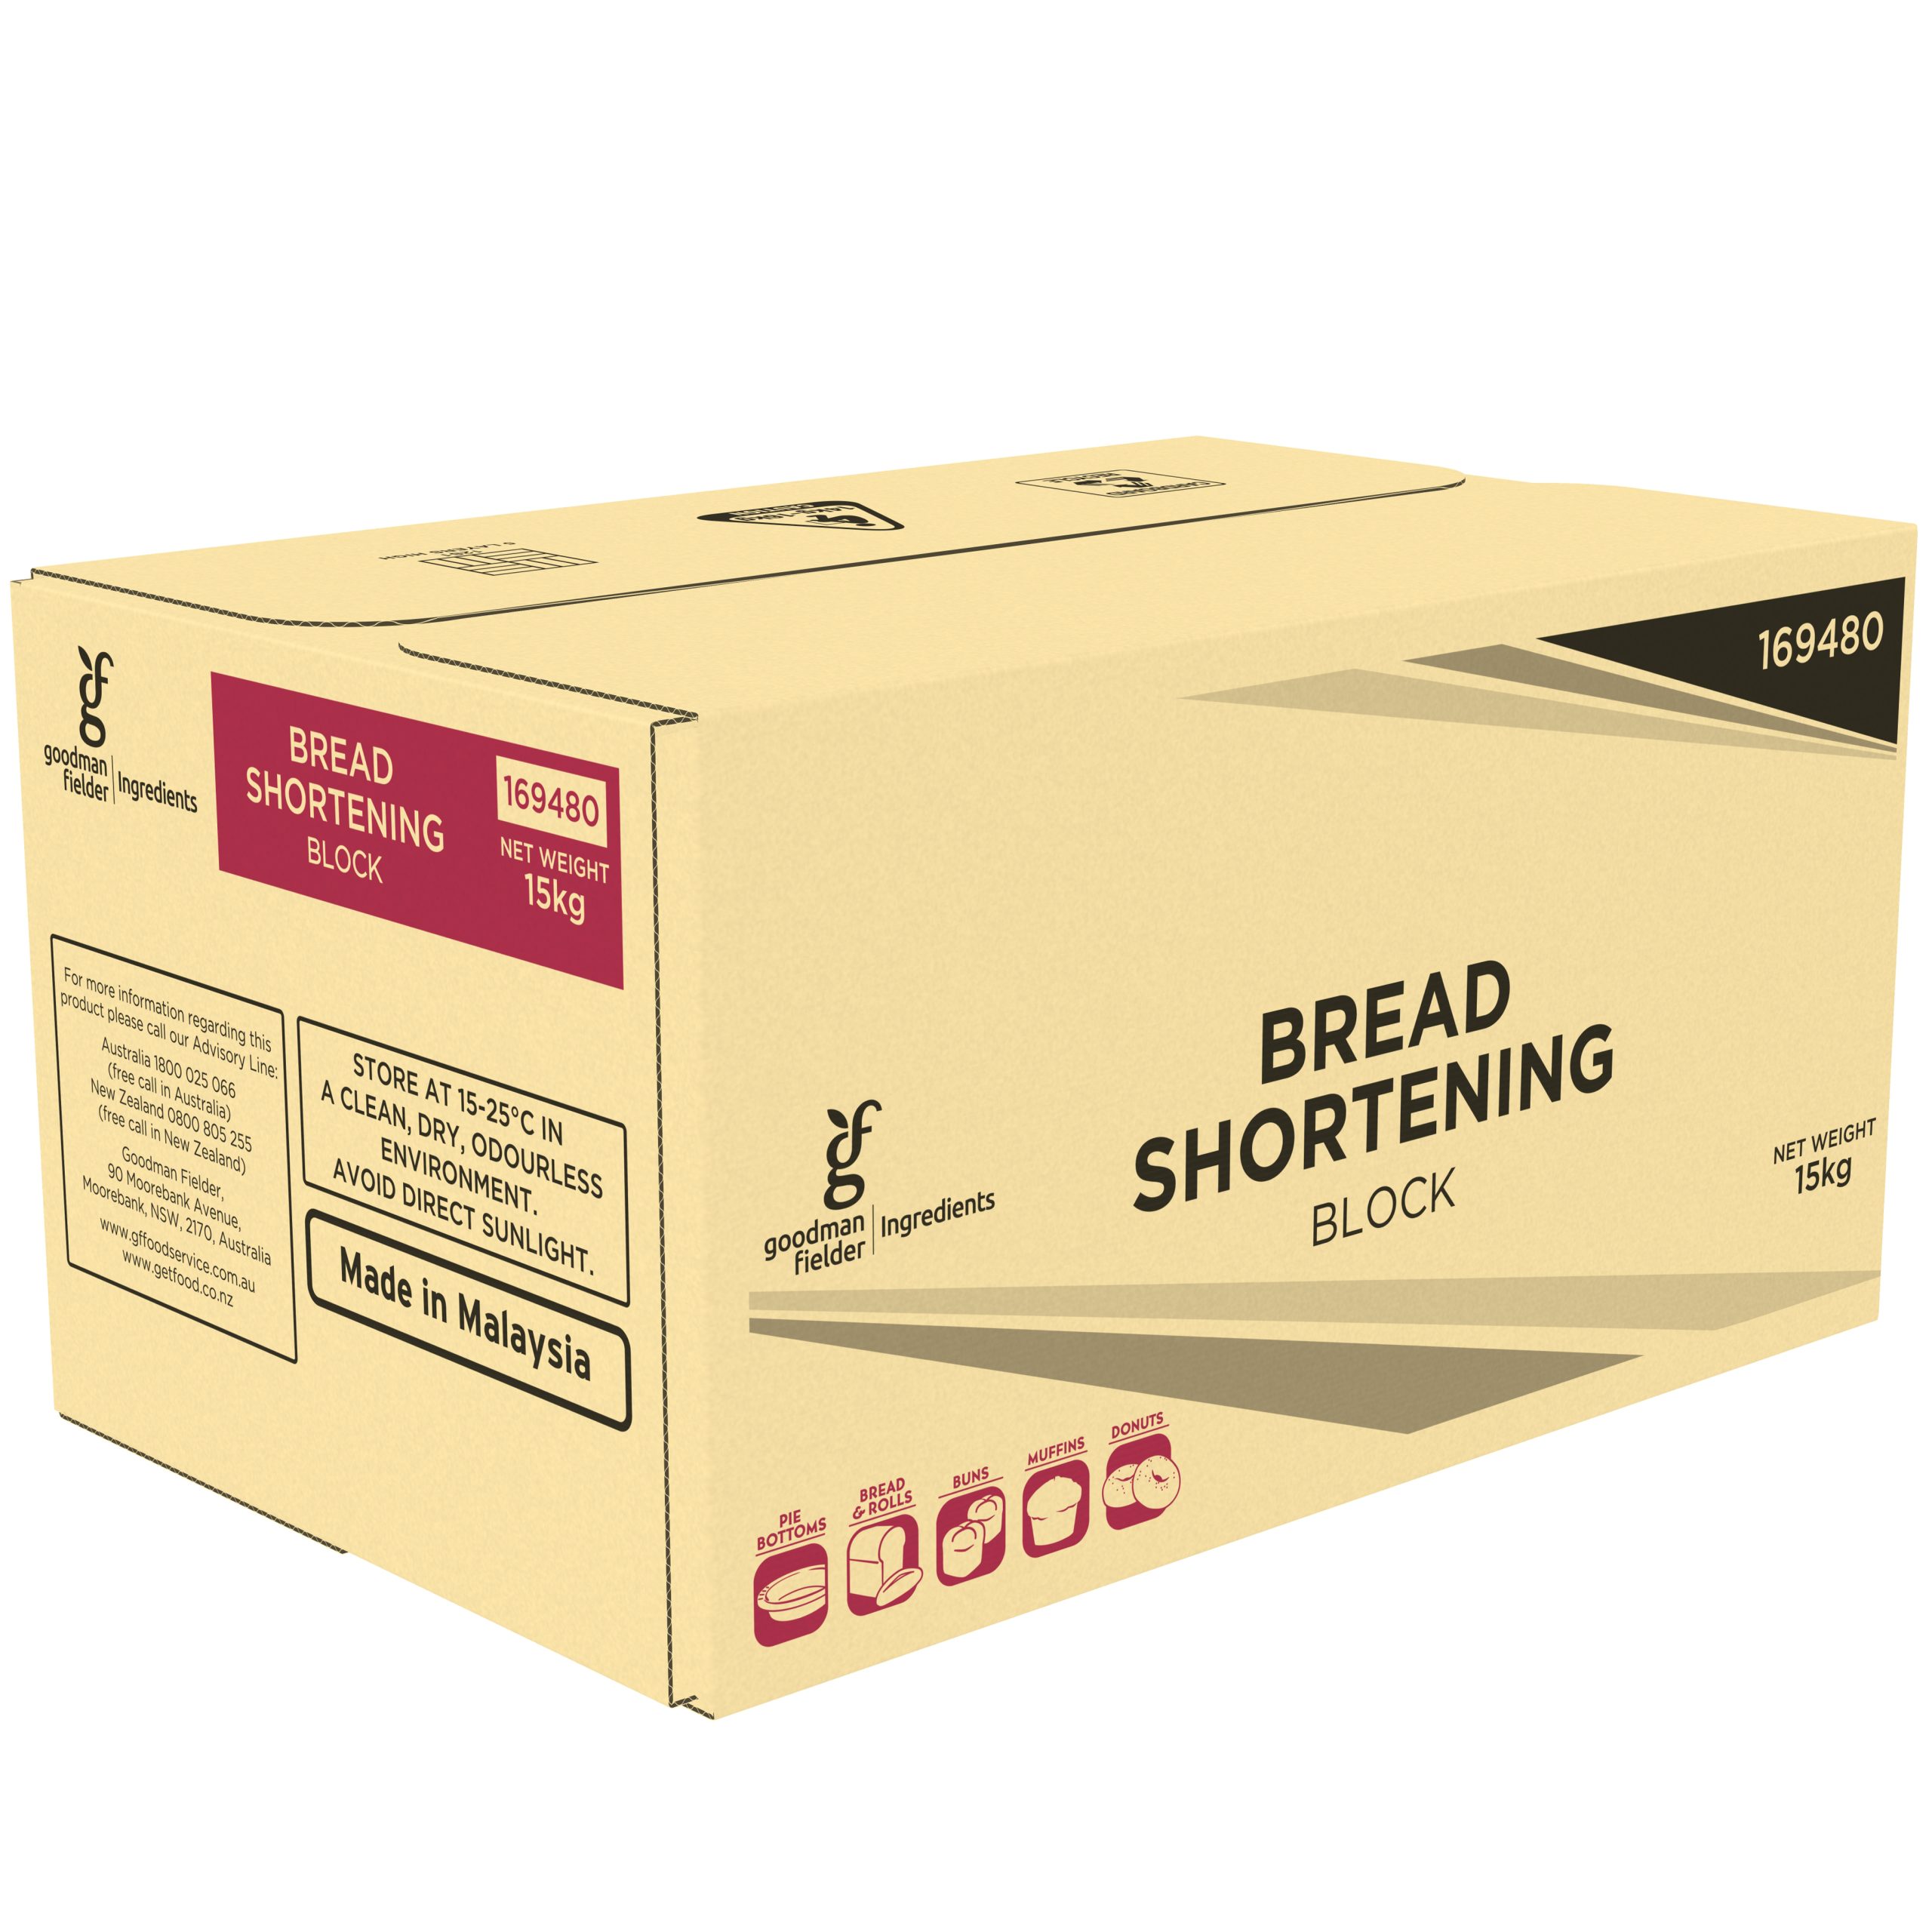 Goodman Fielder Ingredients Bread Shortening Block 15kg product photo